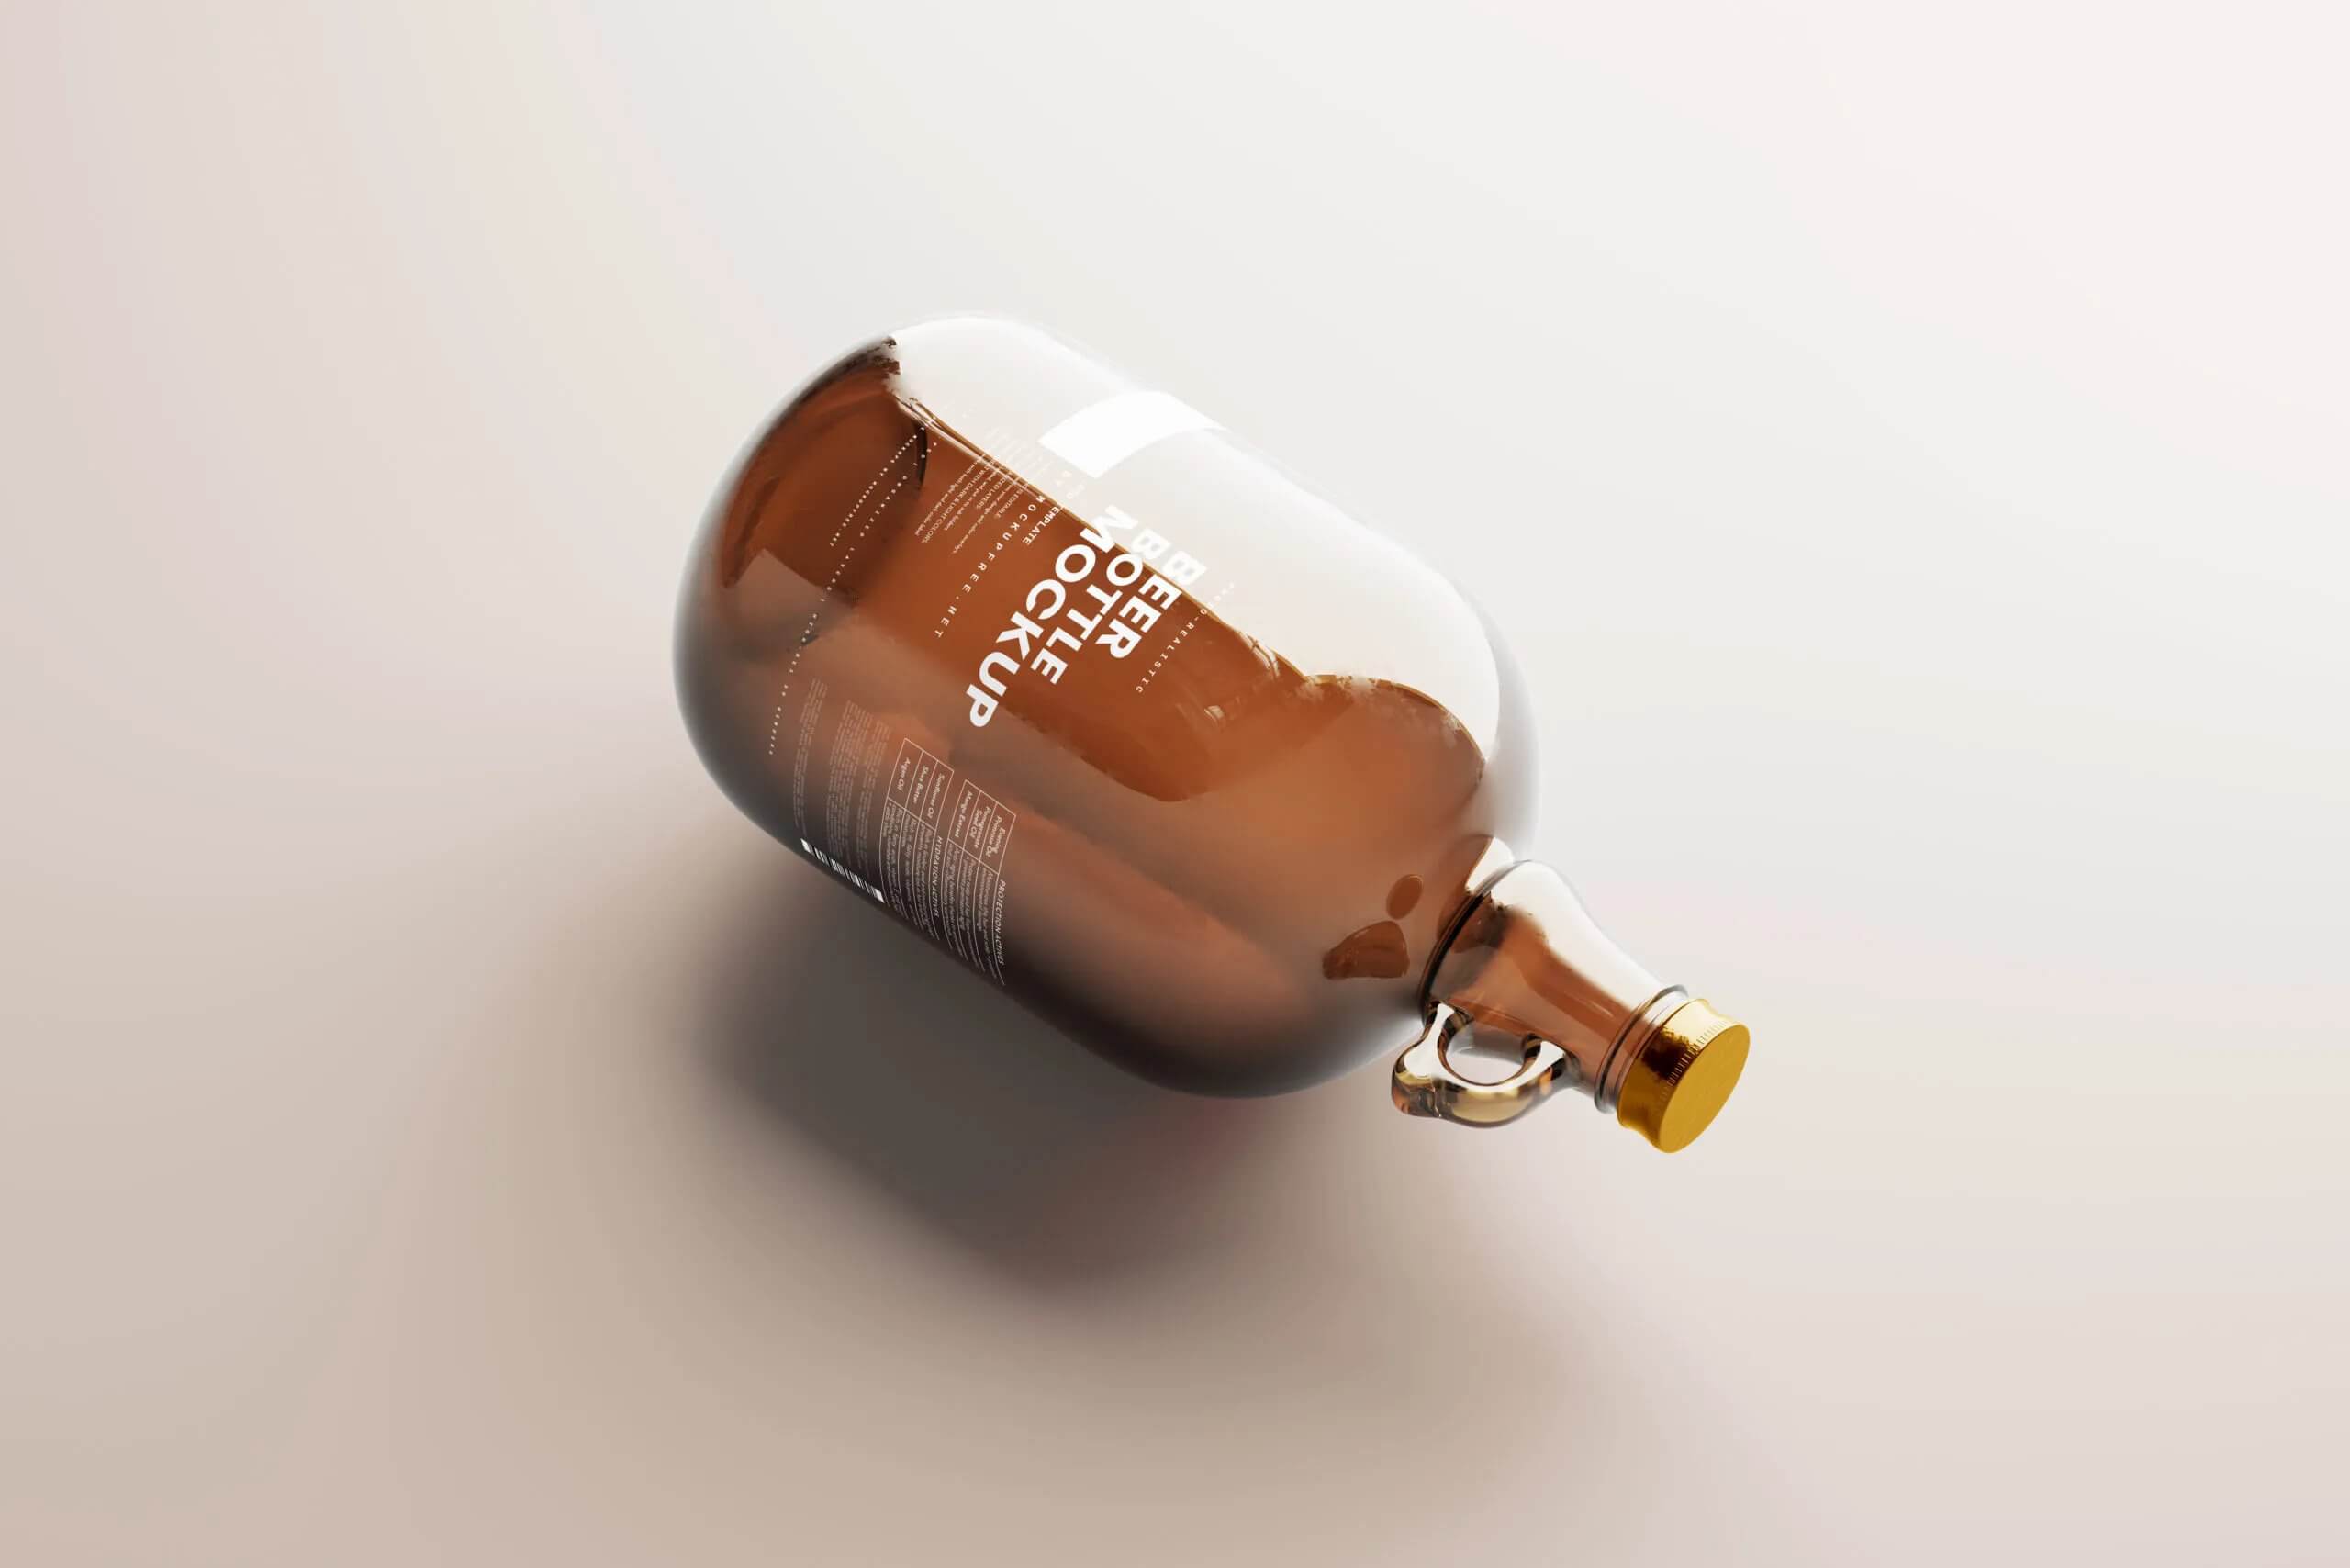 5 Shots of Amber Glass Beer Bottle Mockup with Handle 1